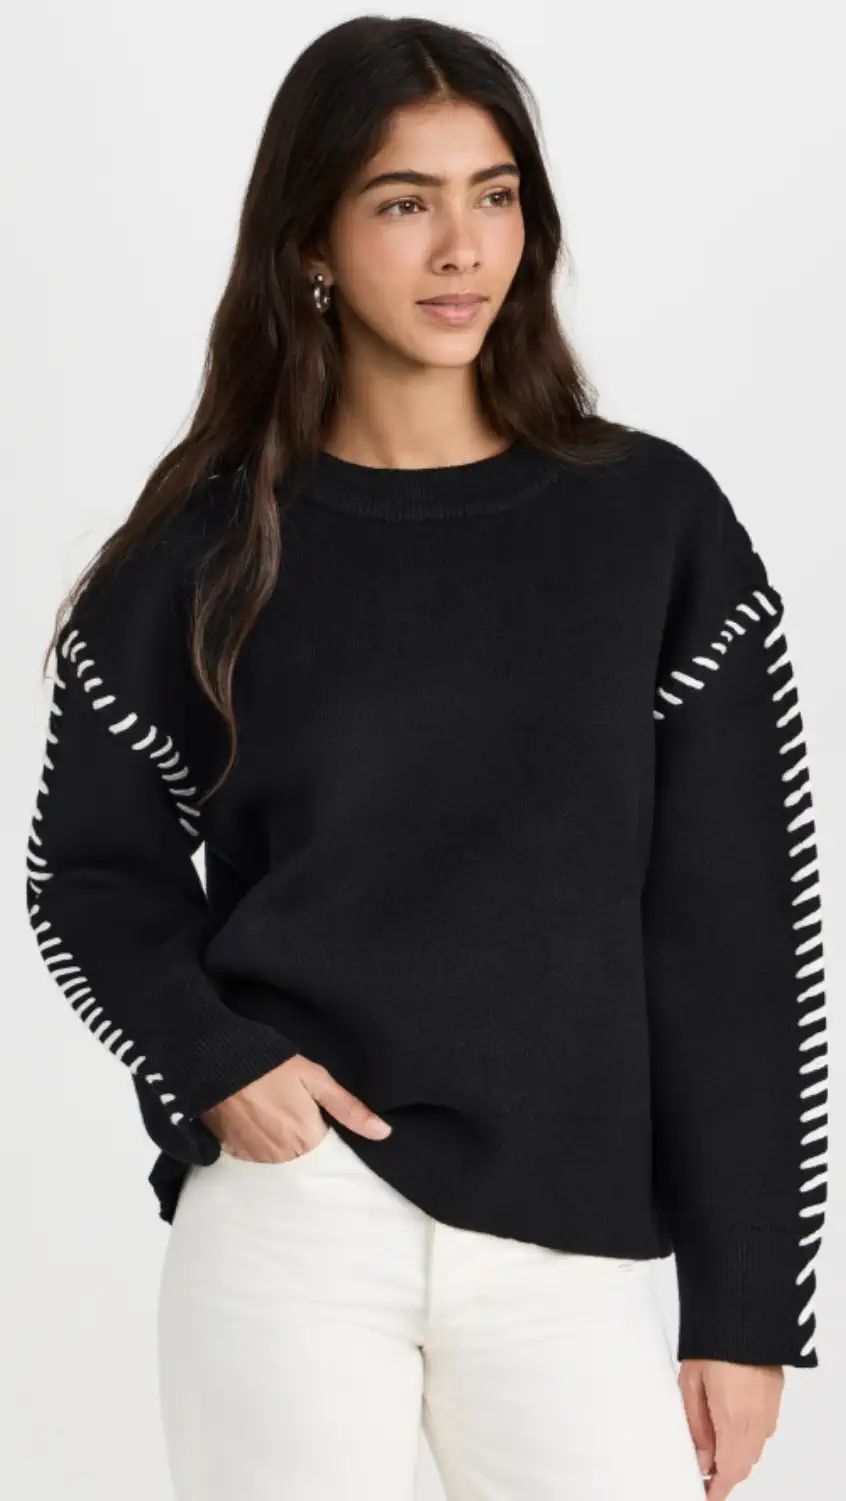 Whip Stitch Sweater | Shopbop